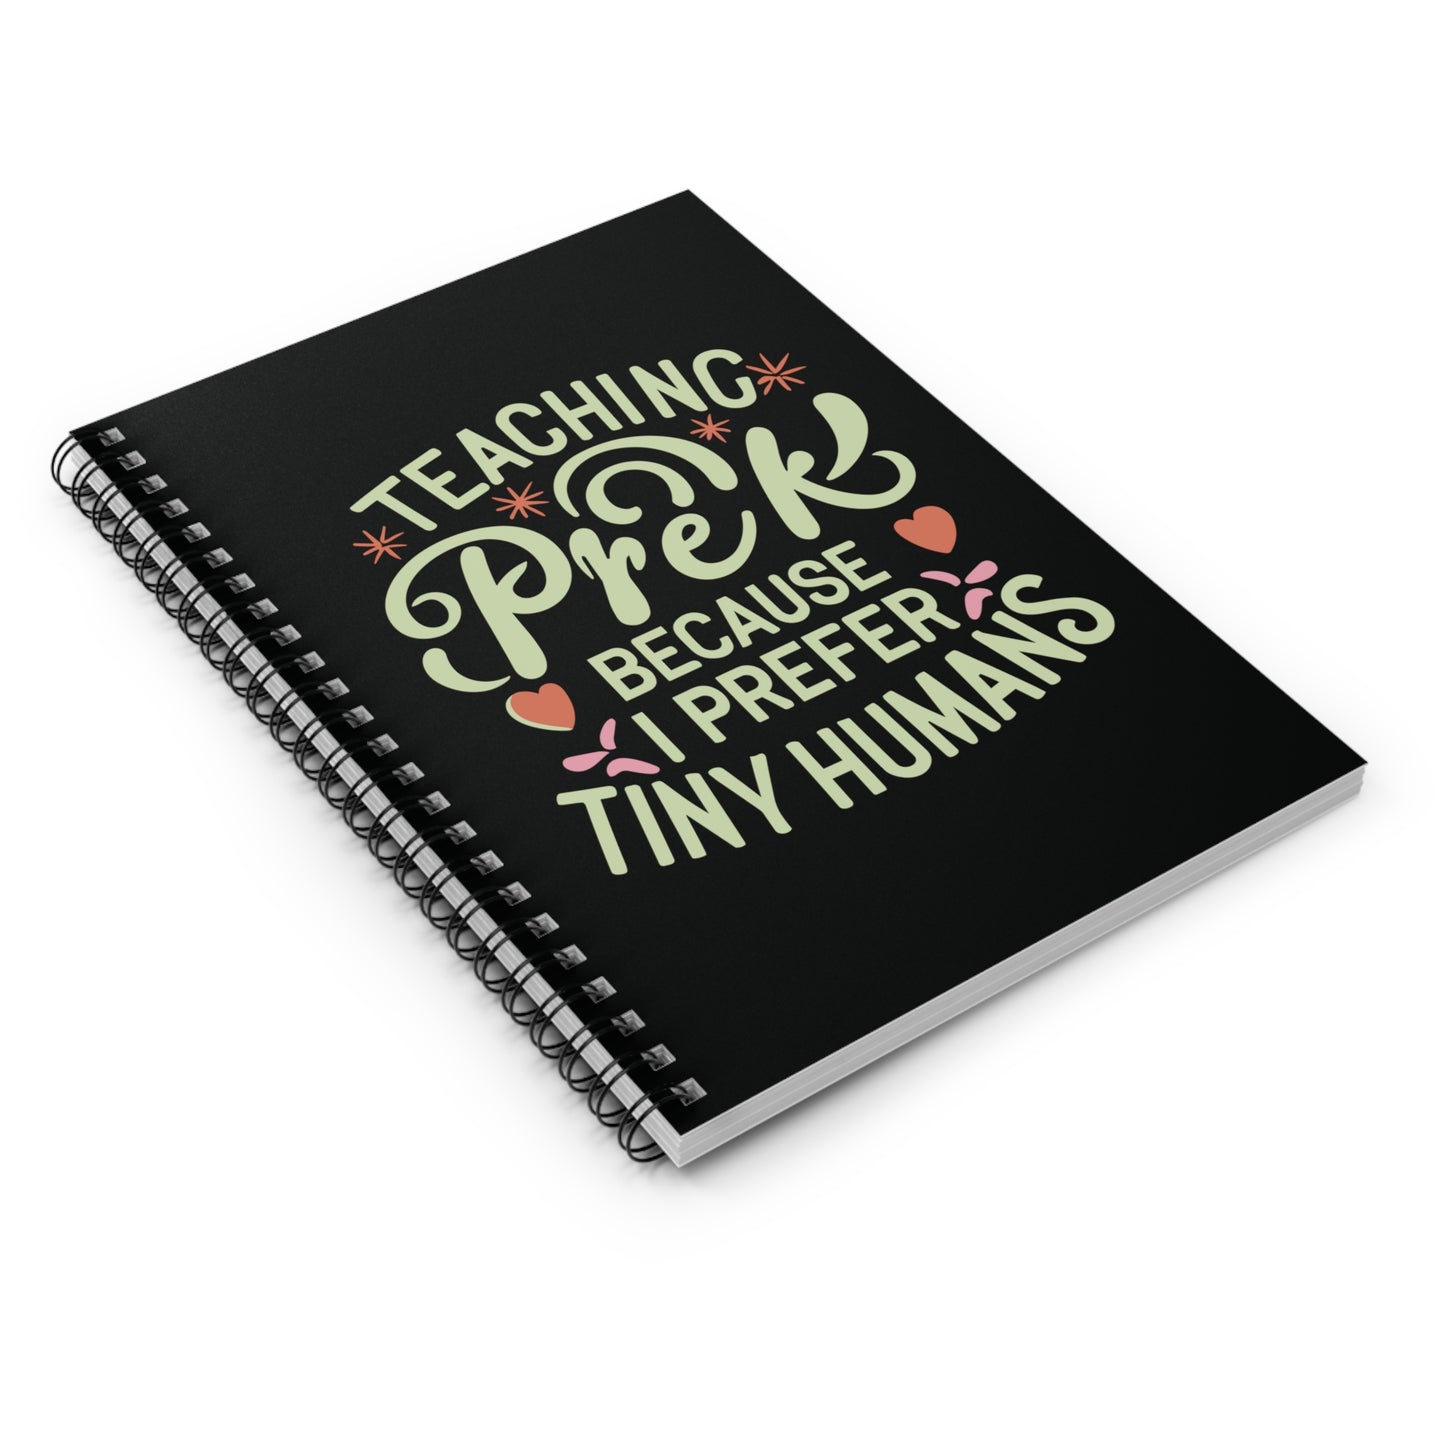 PreK Teacher Spiral Notebook - "Teaching PreK Because I Prefer Tiny Humans"